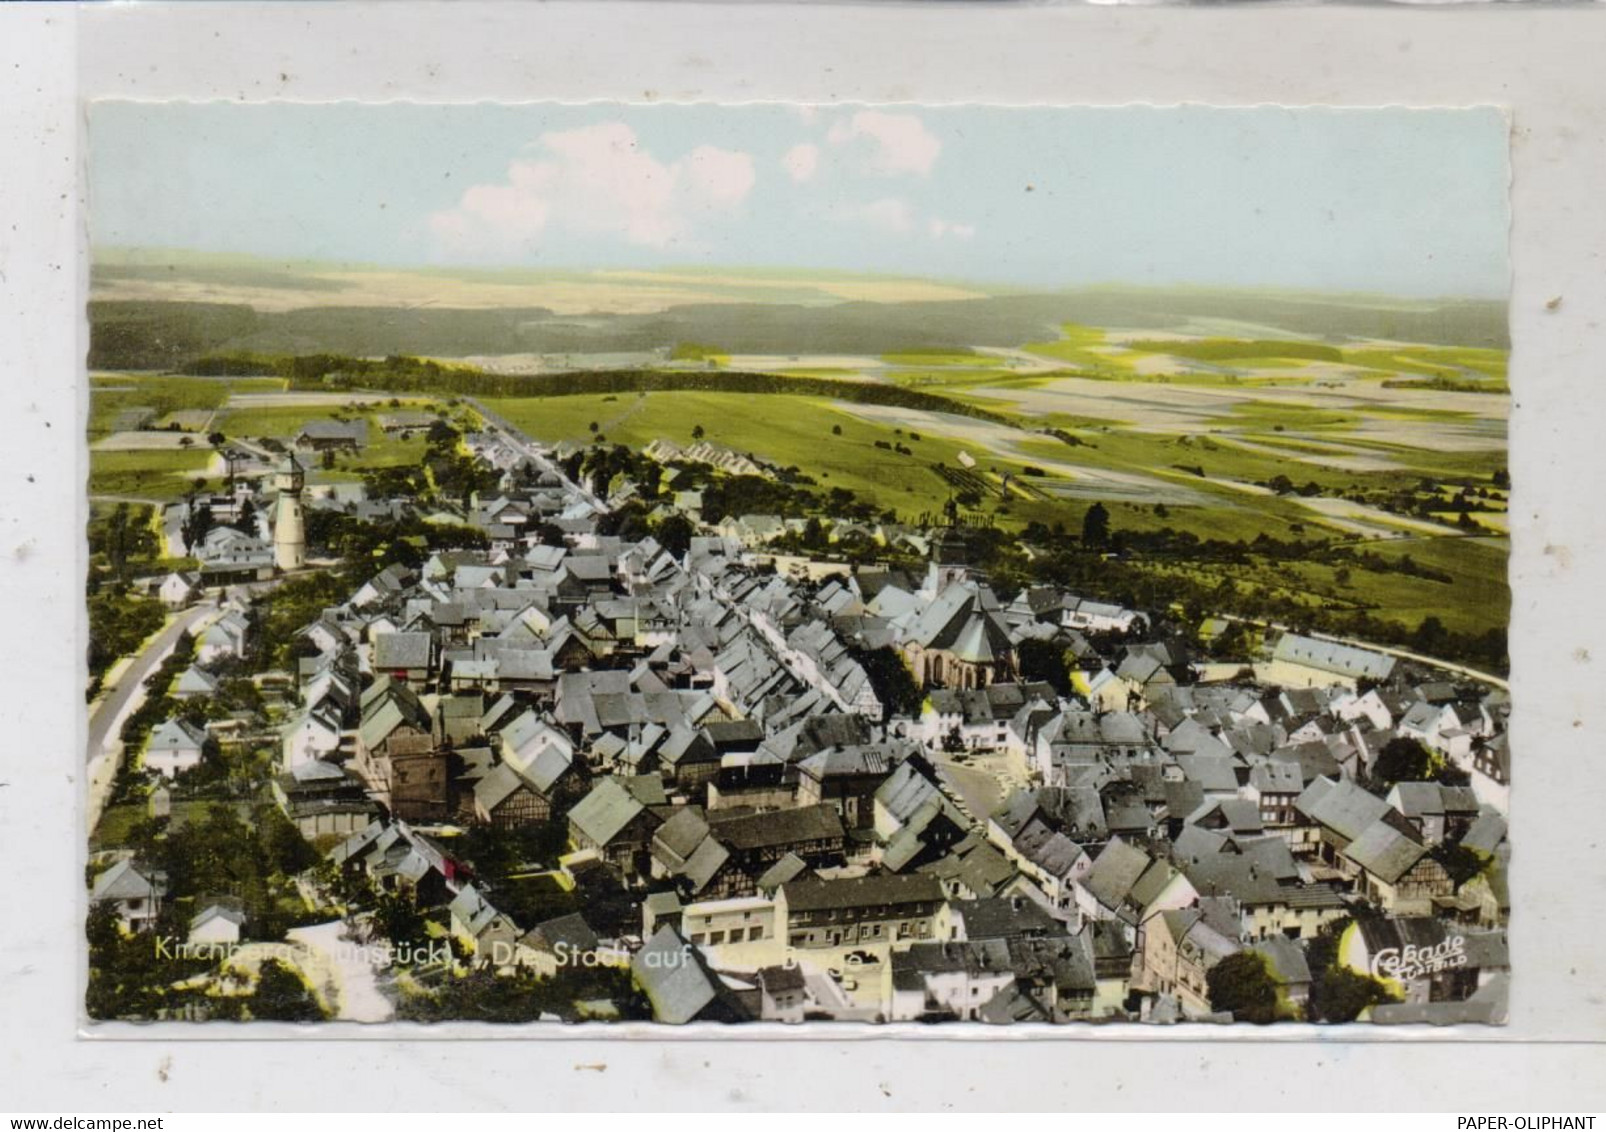 6544 KIRCHBERG, Luftaufnahme, 1964, Handcoloriert - Rhein-Hunsrueck-Kreis